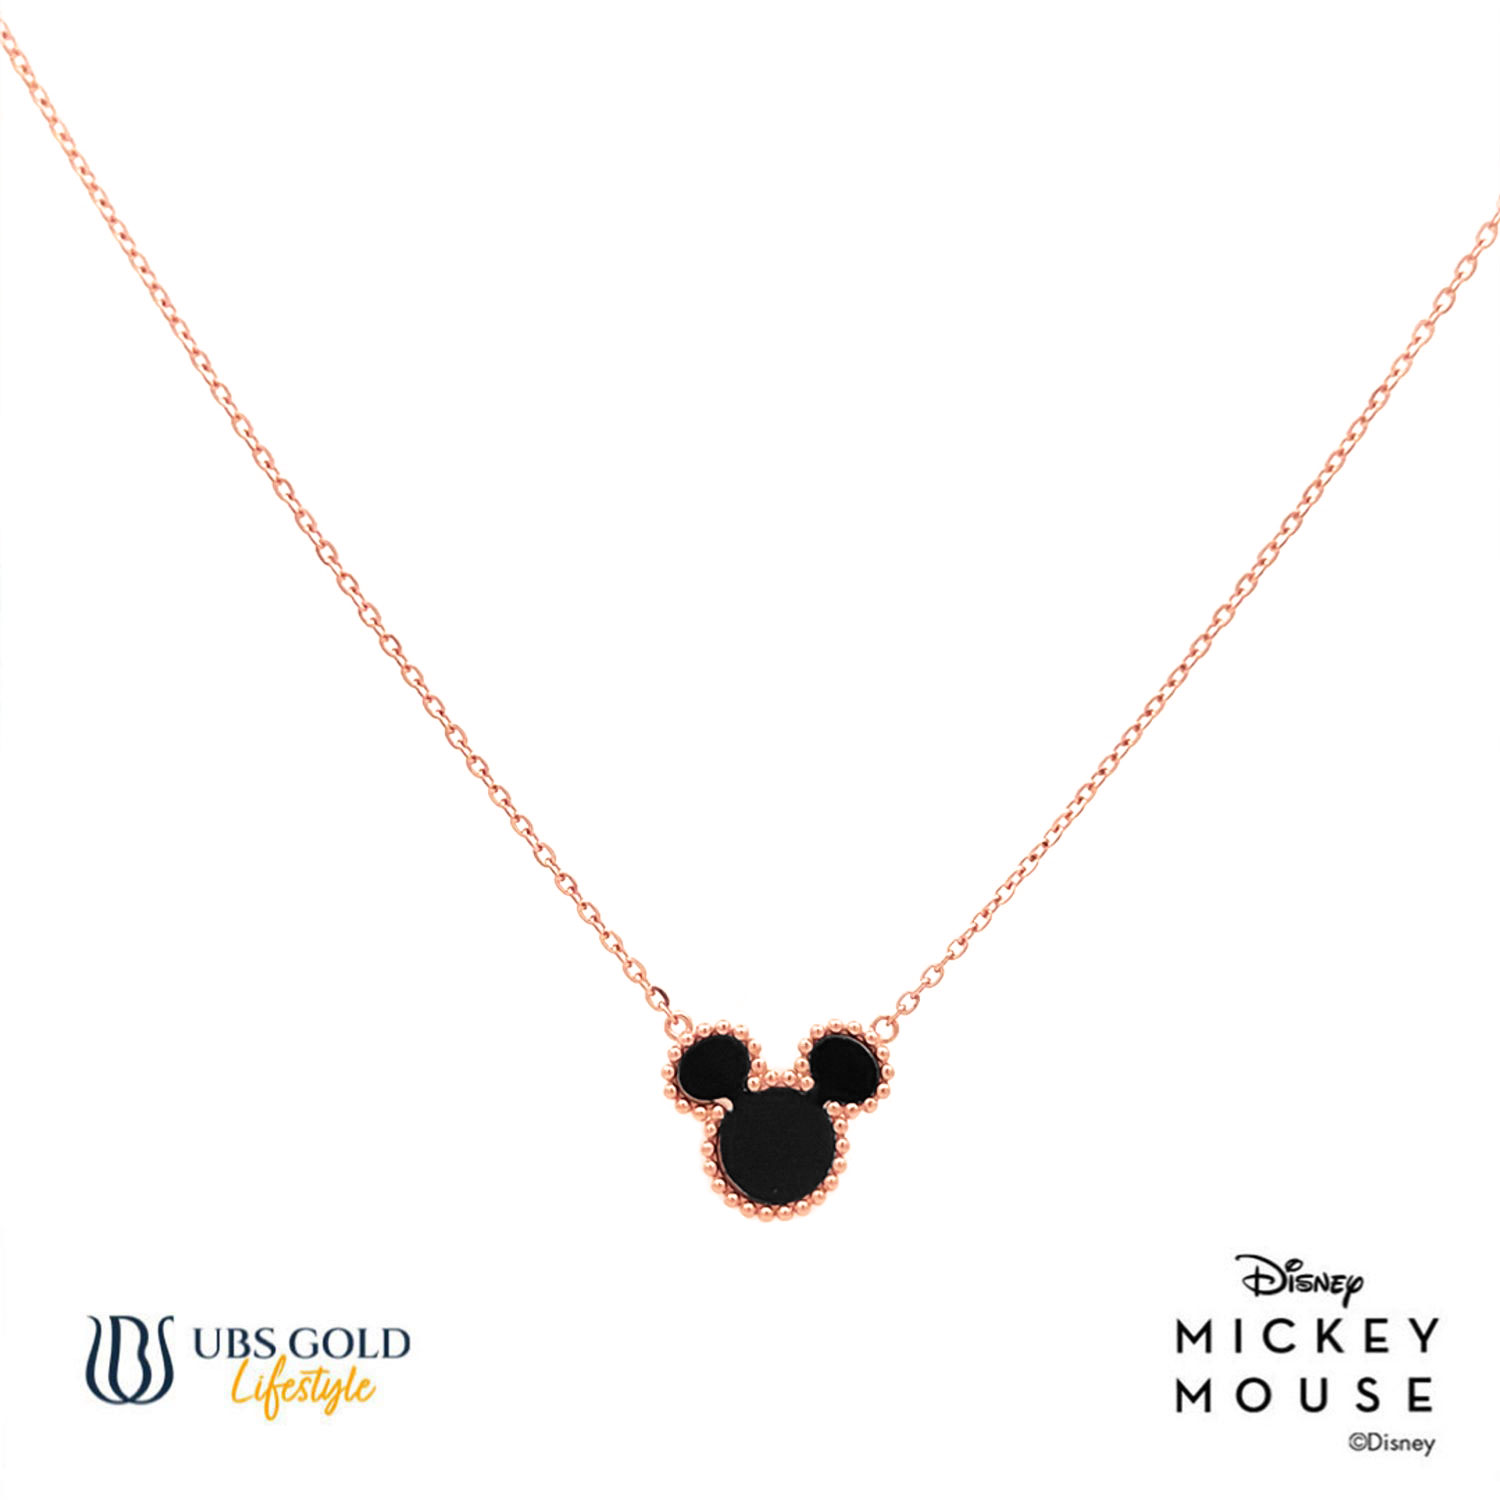 UBS Gold Kalung Emas Disney Mickey Mouse - Kky0486 - 17K